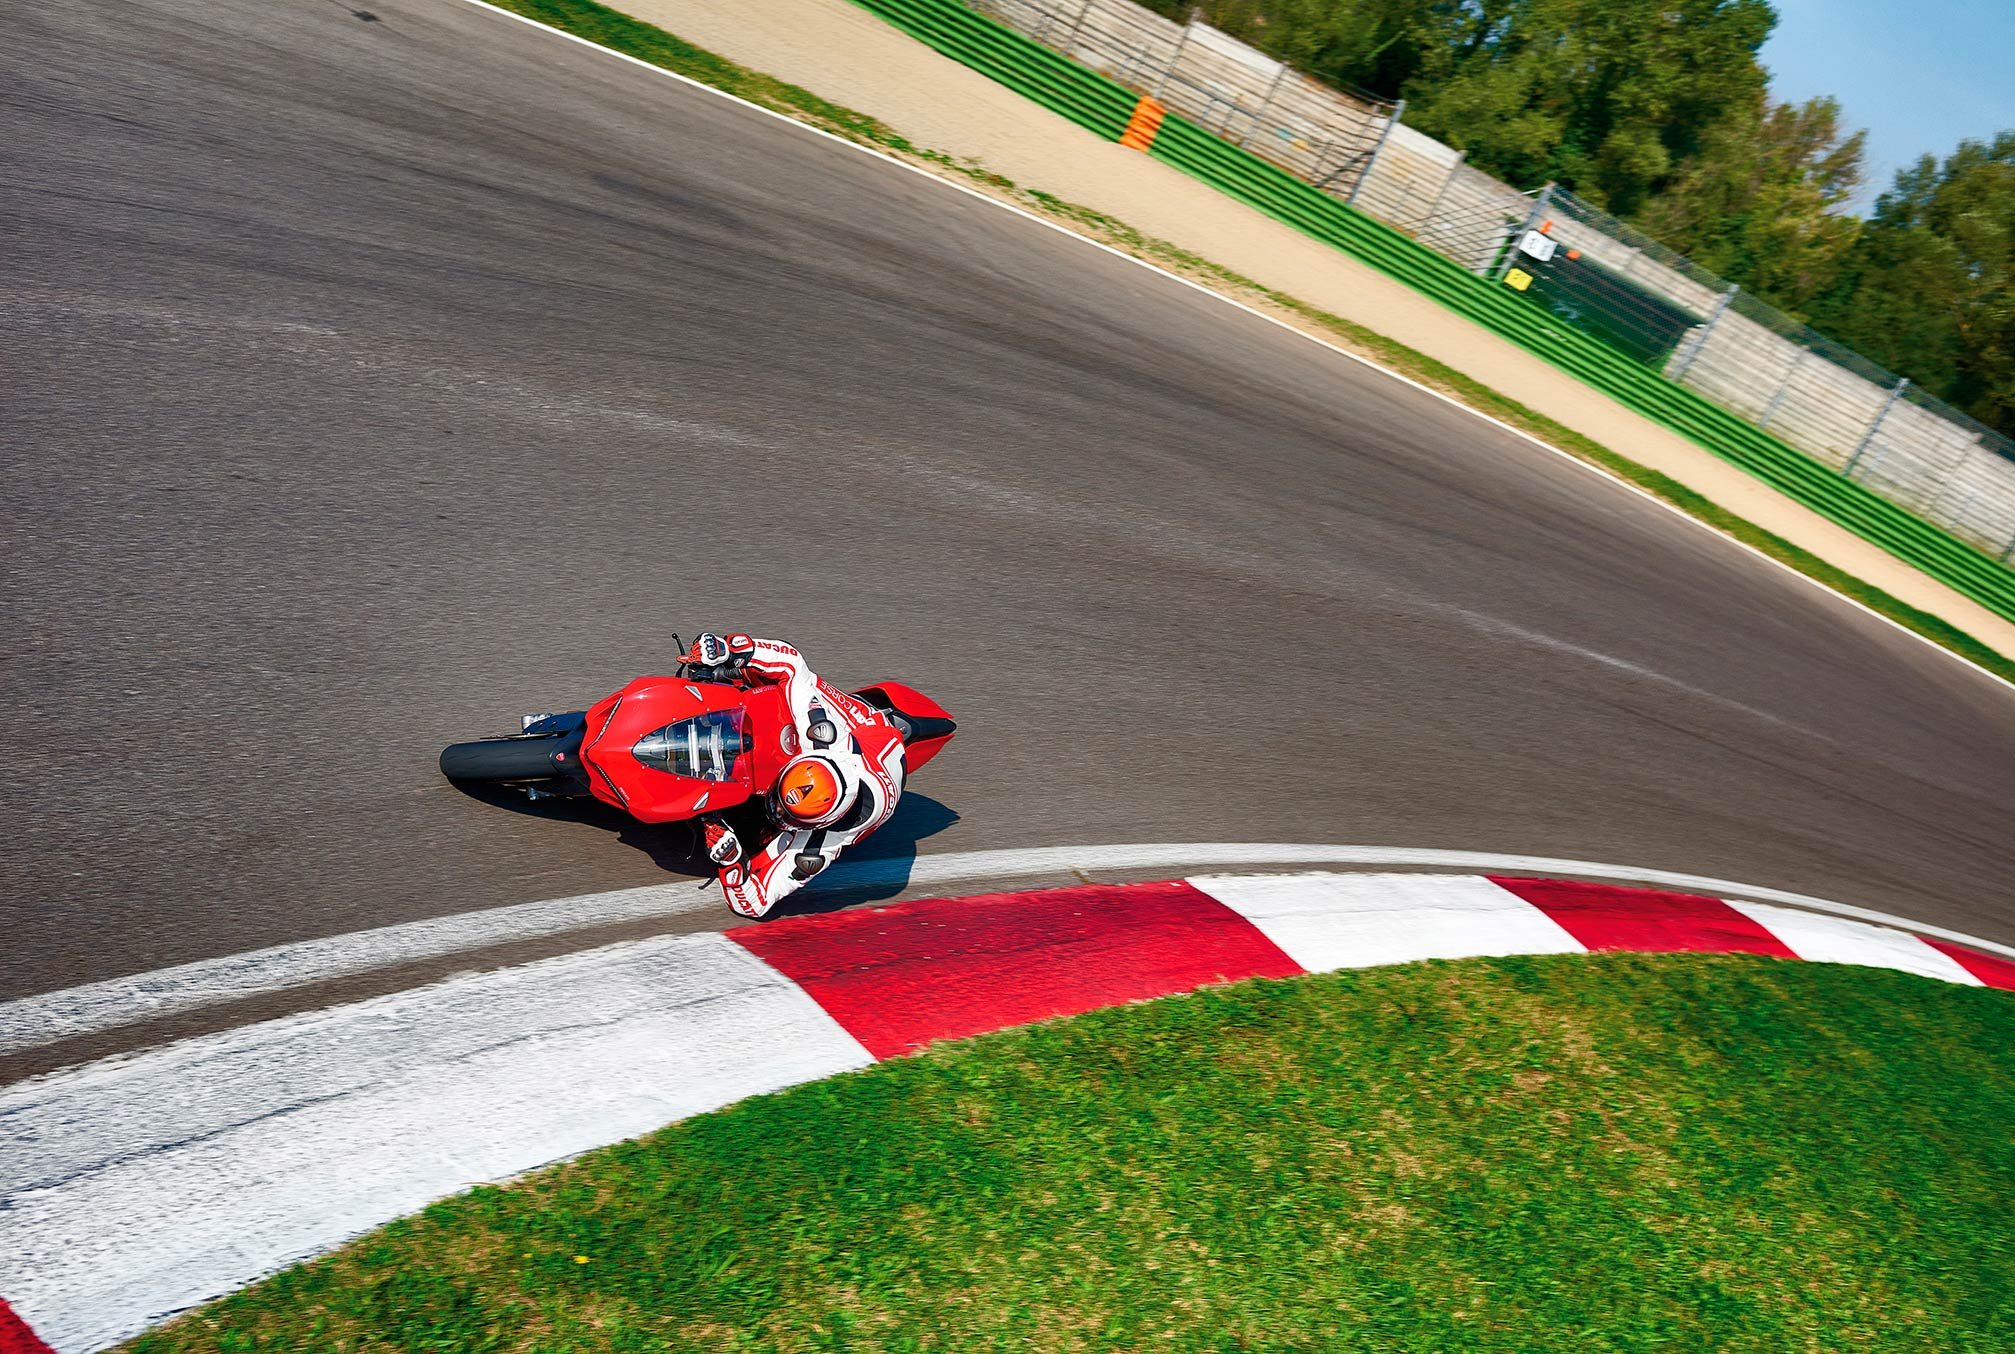 2015, Ducati, Superbike, 1299, Panigale Wallpaper